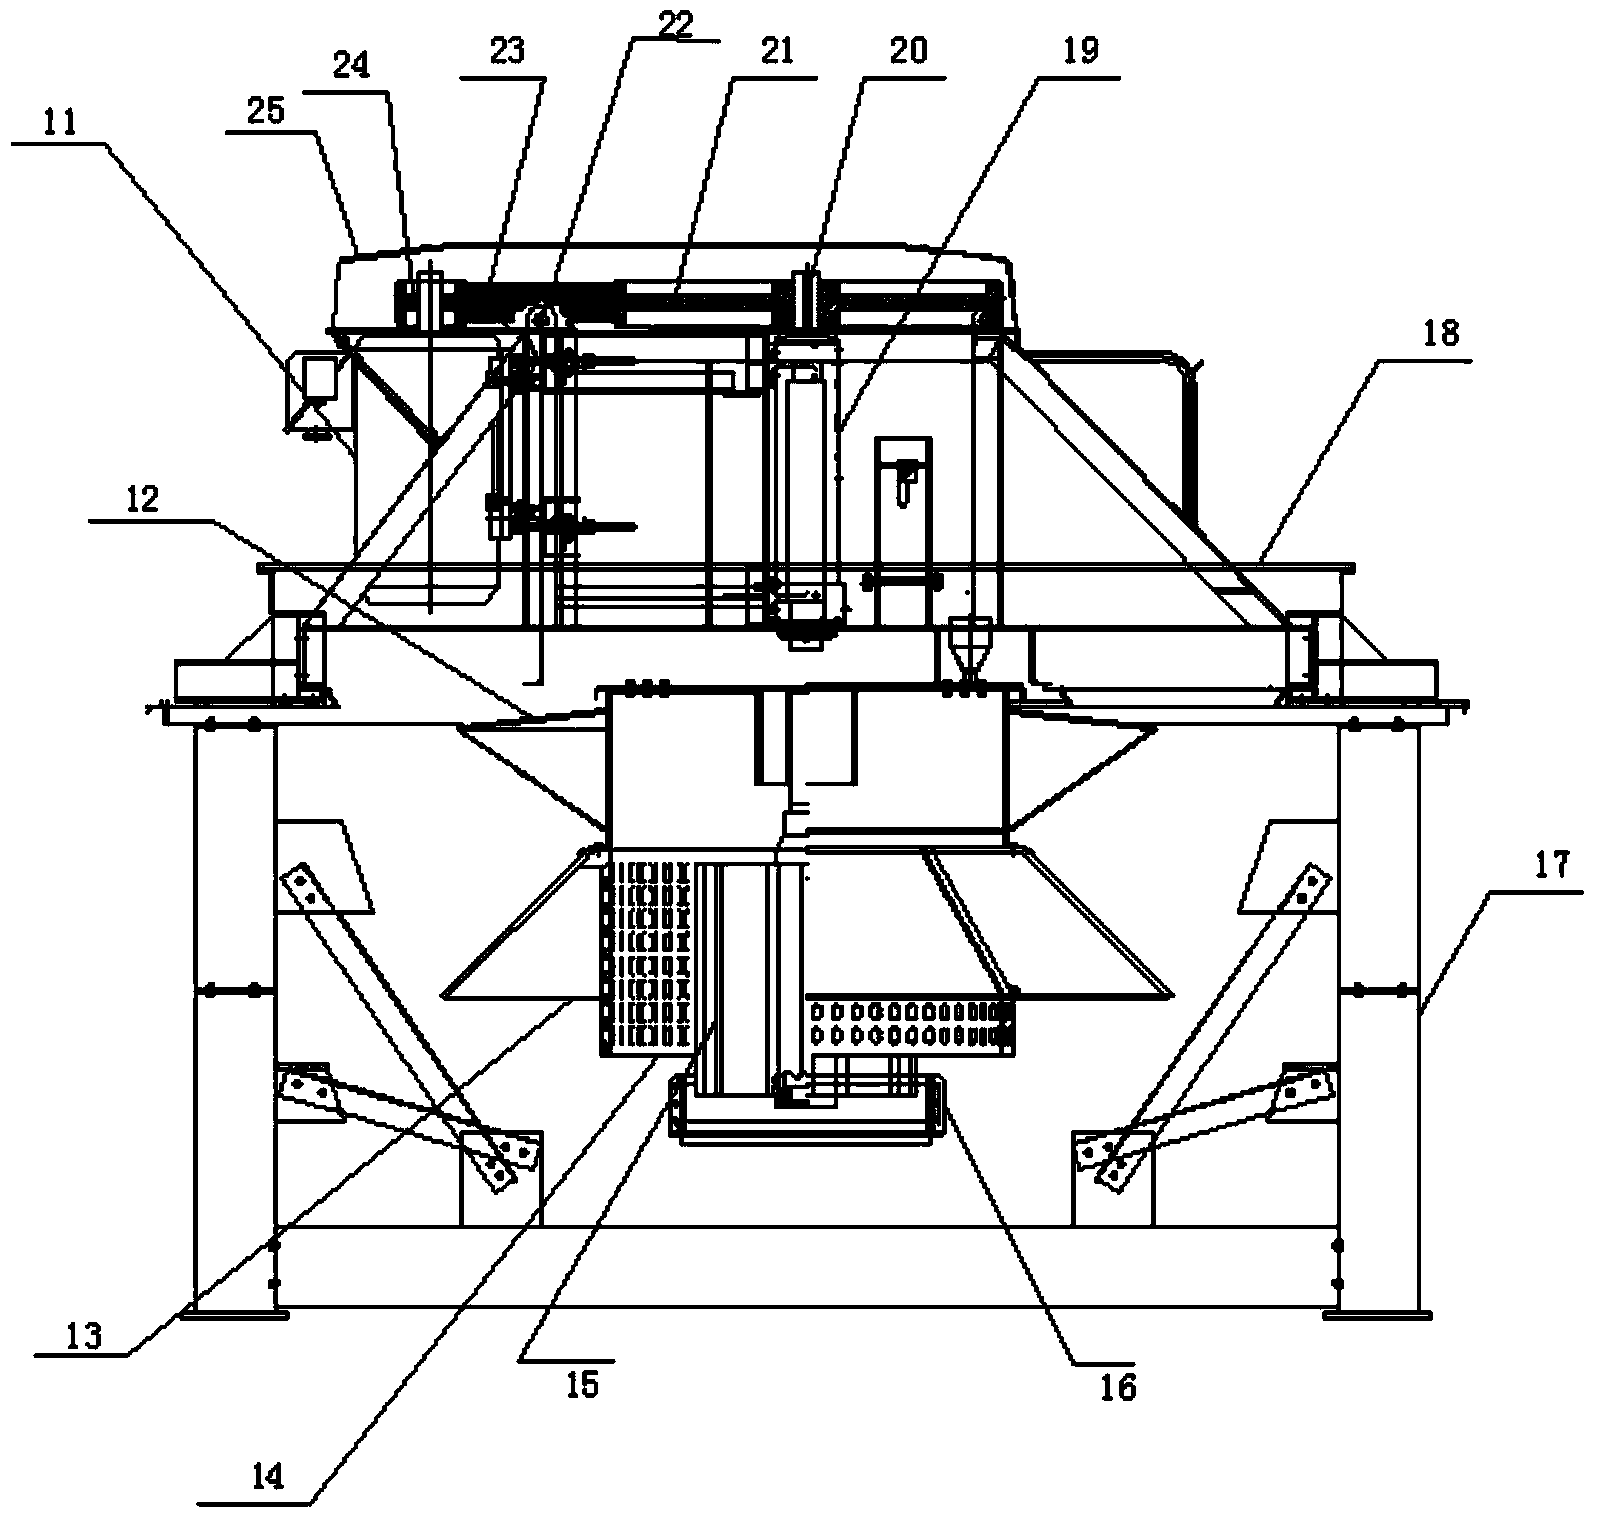 Off-line assembling method of large flotation machine rotor